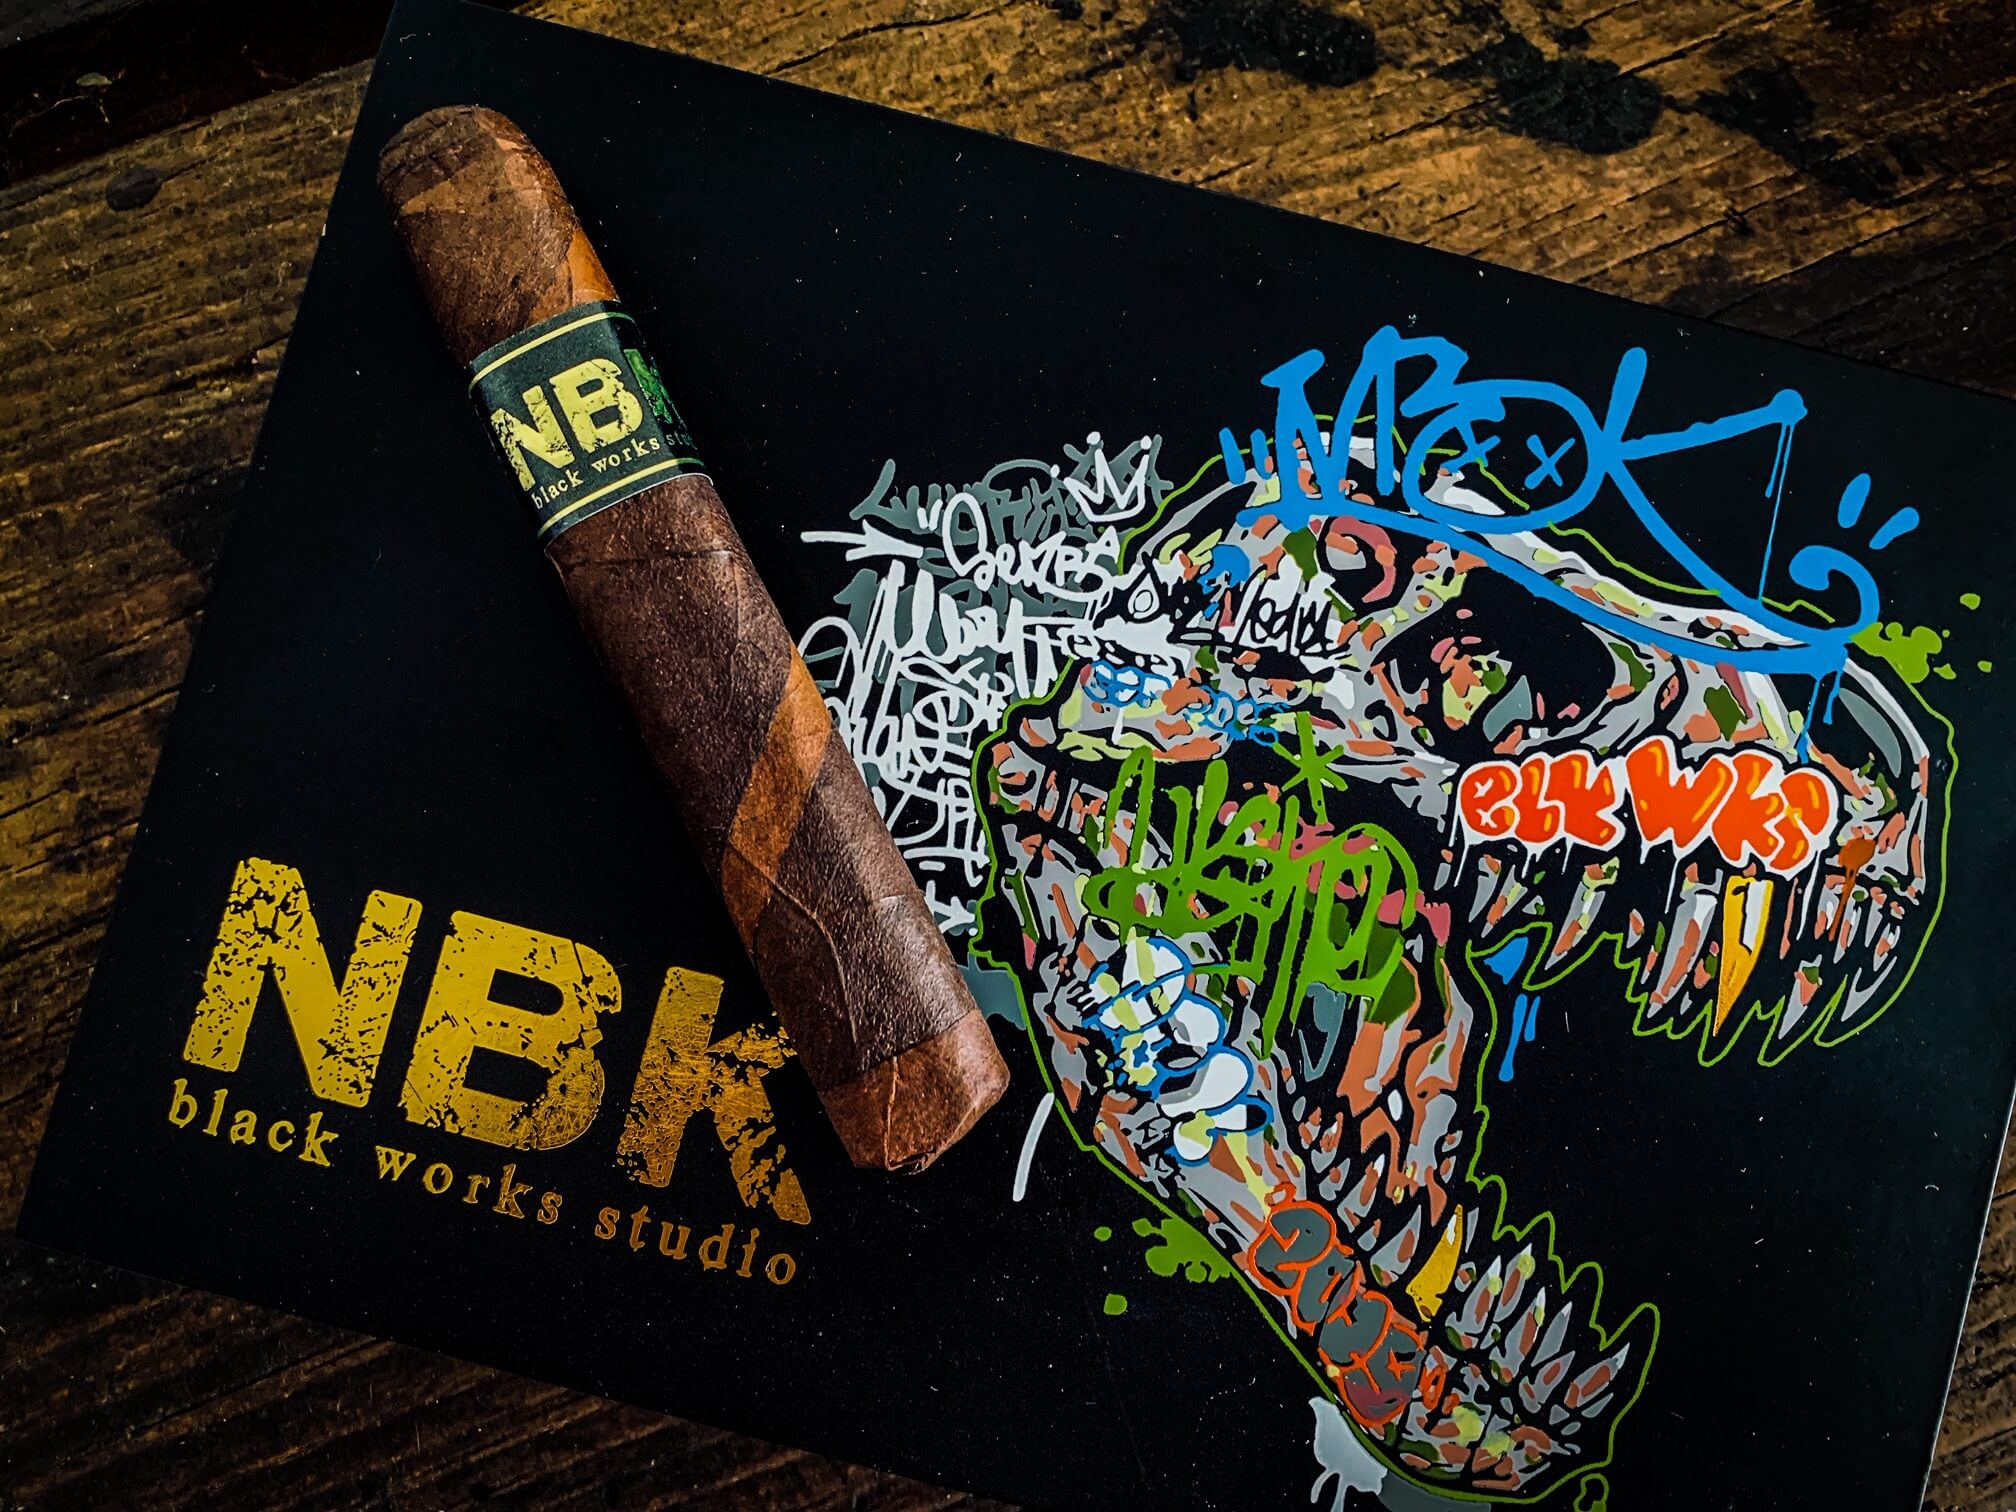 Cigar News: Black Works Studio Announces NBK “LIZARD KING”